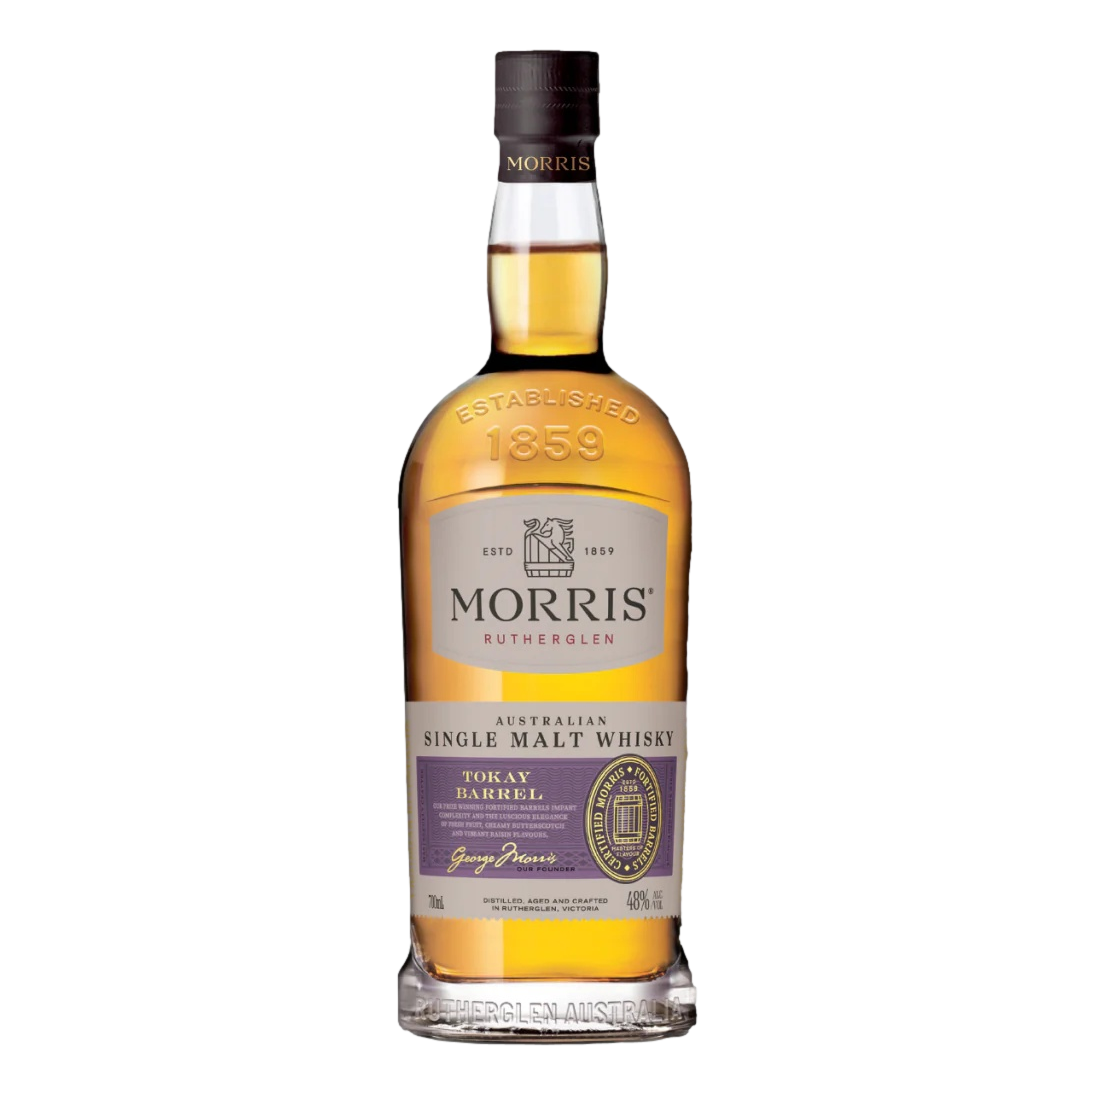 Morris Tokay Barrel Australian Single Malt Whisky 700ml